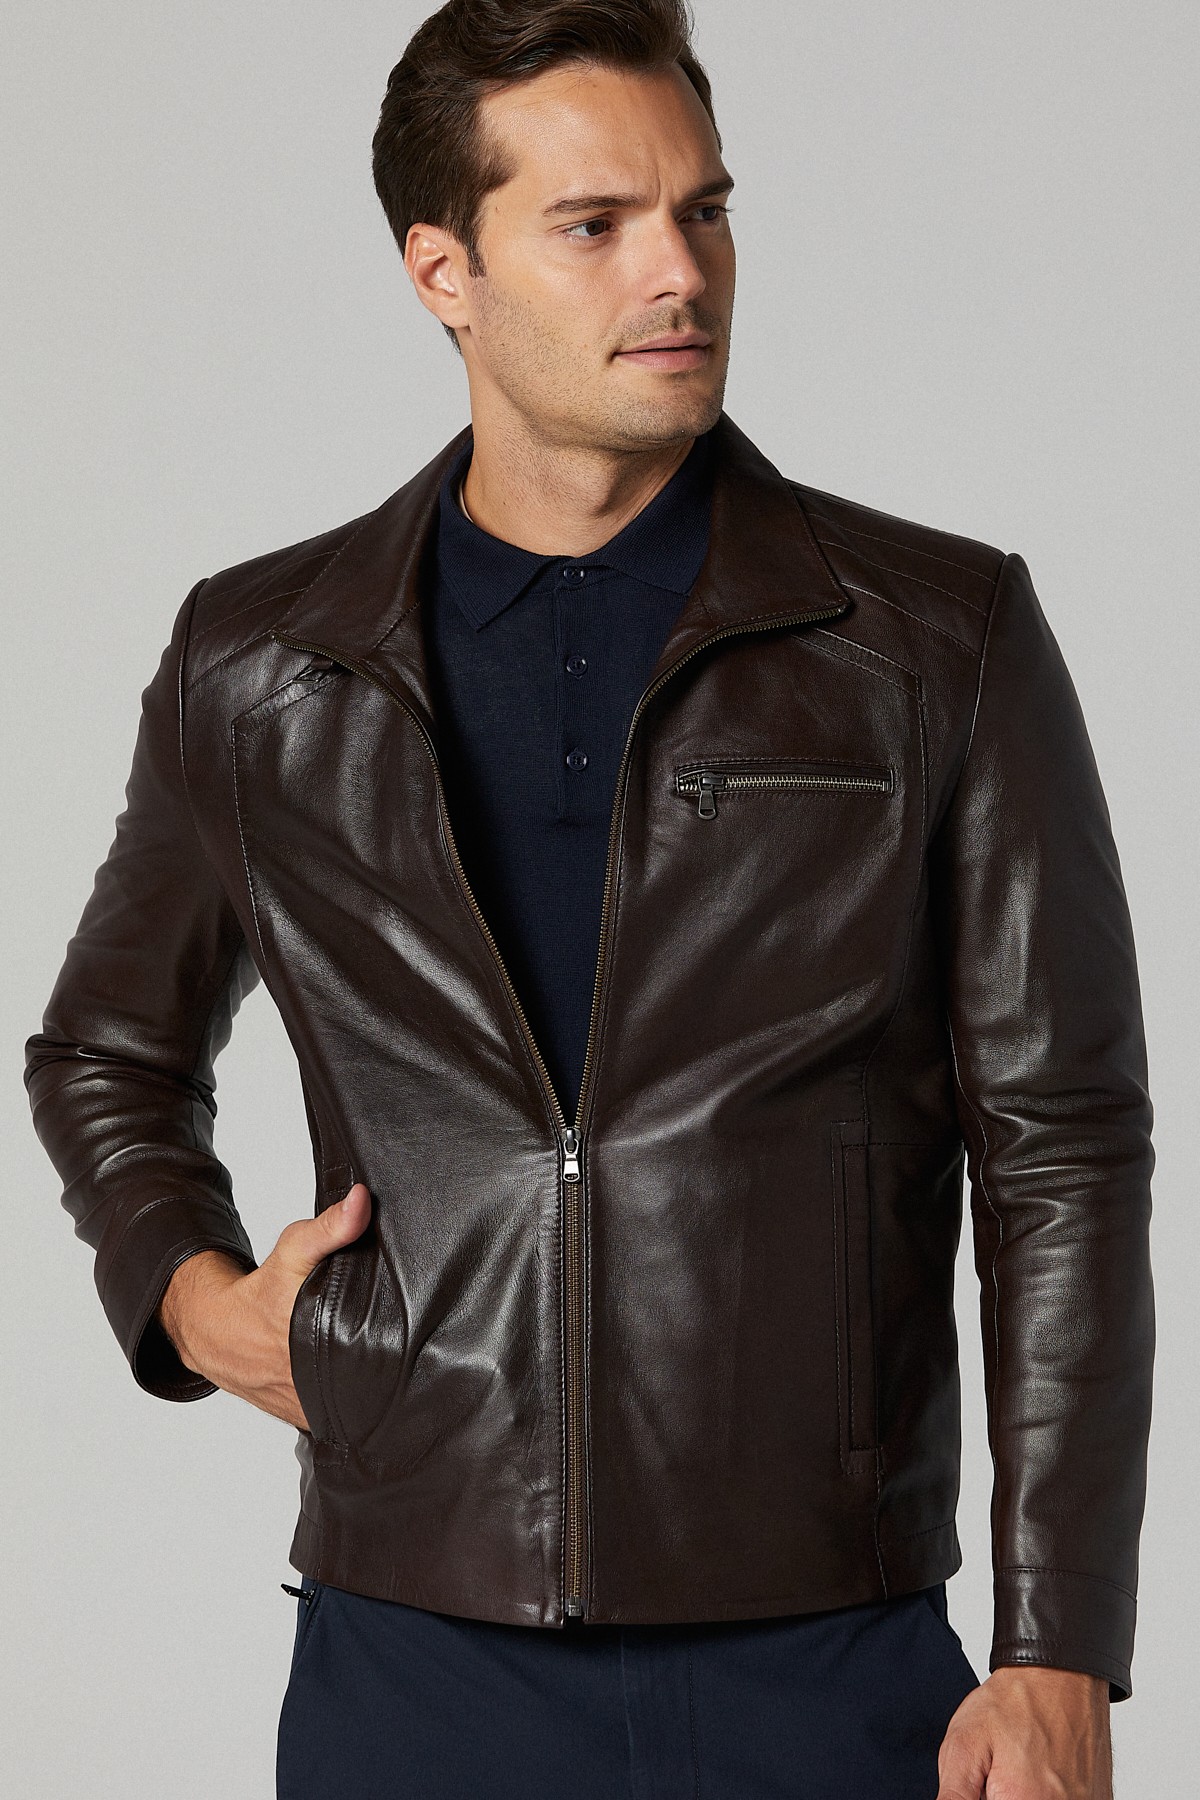 Levi Brown Vintage Men Leather Jacket | Urban Fashion Studio